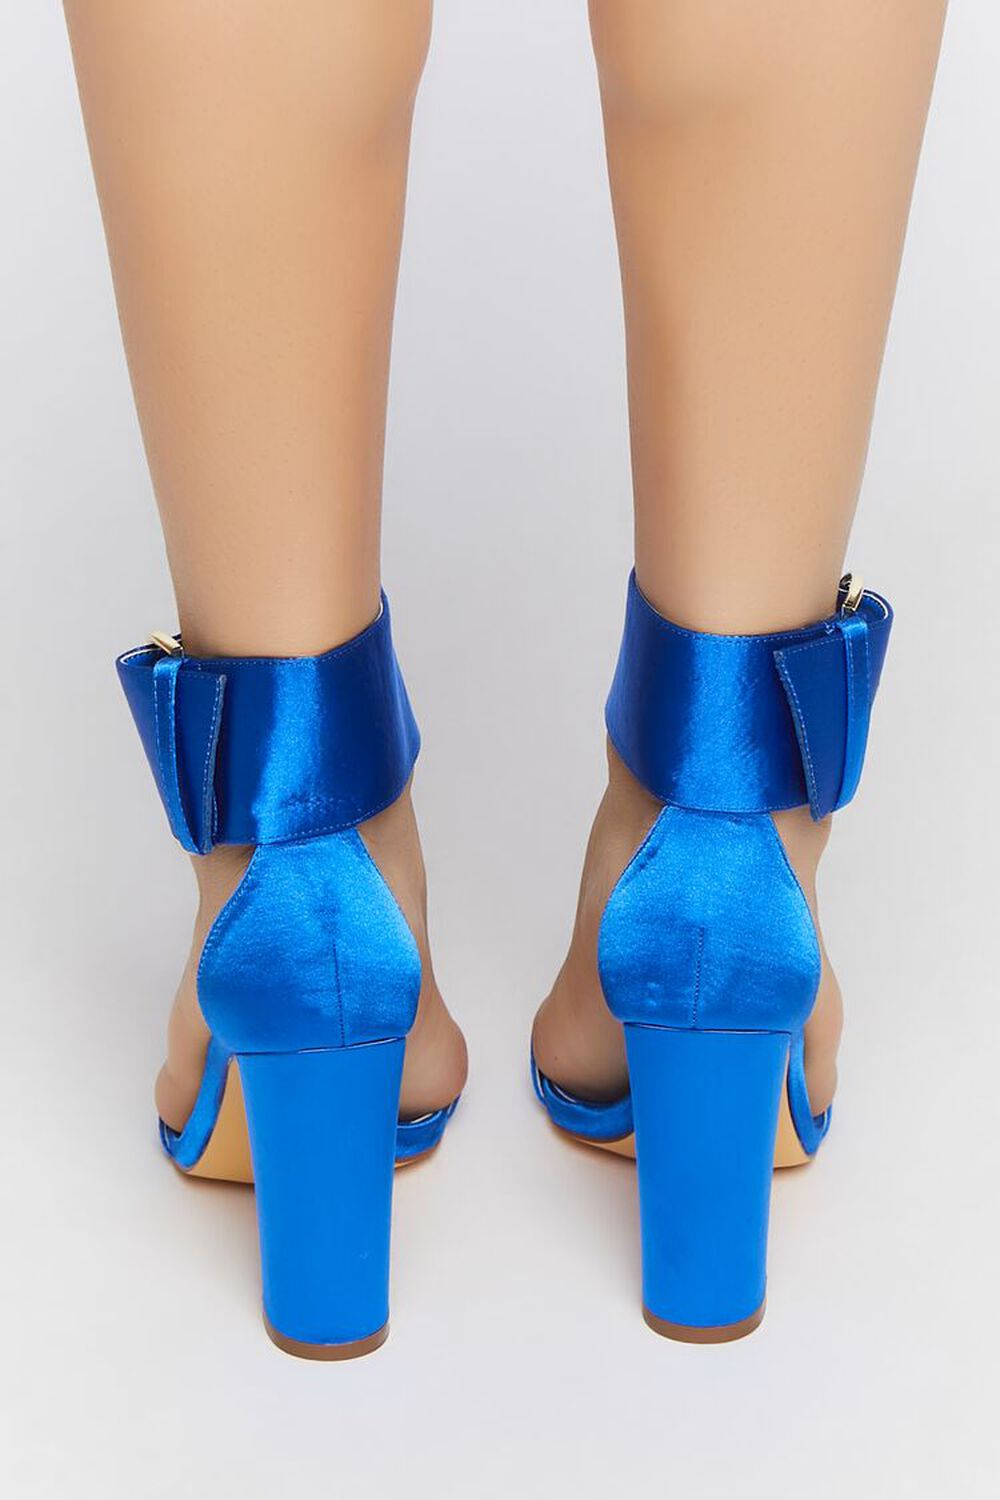 BLUE Open-Toe Buckled Heels, image 3